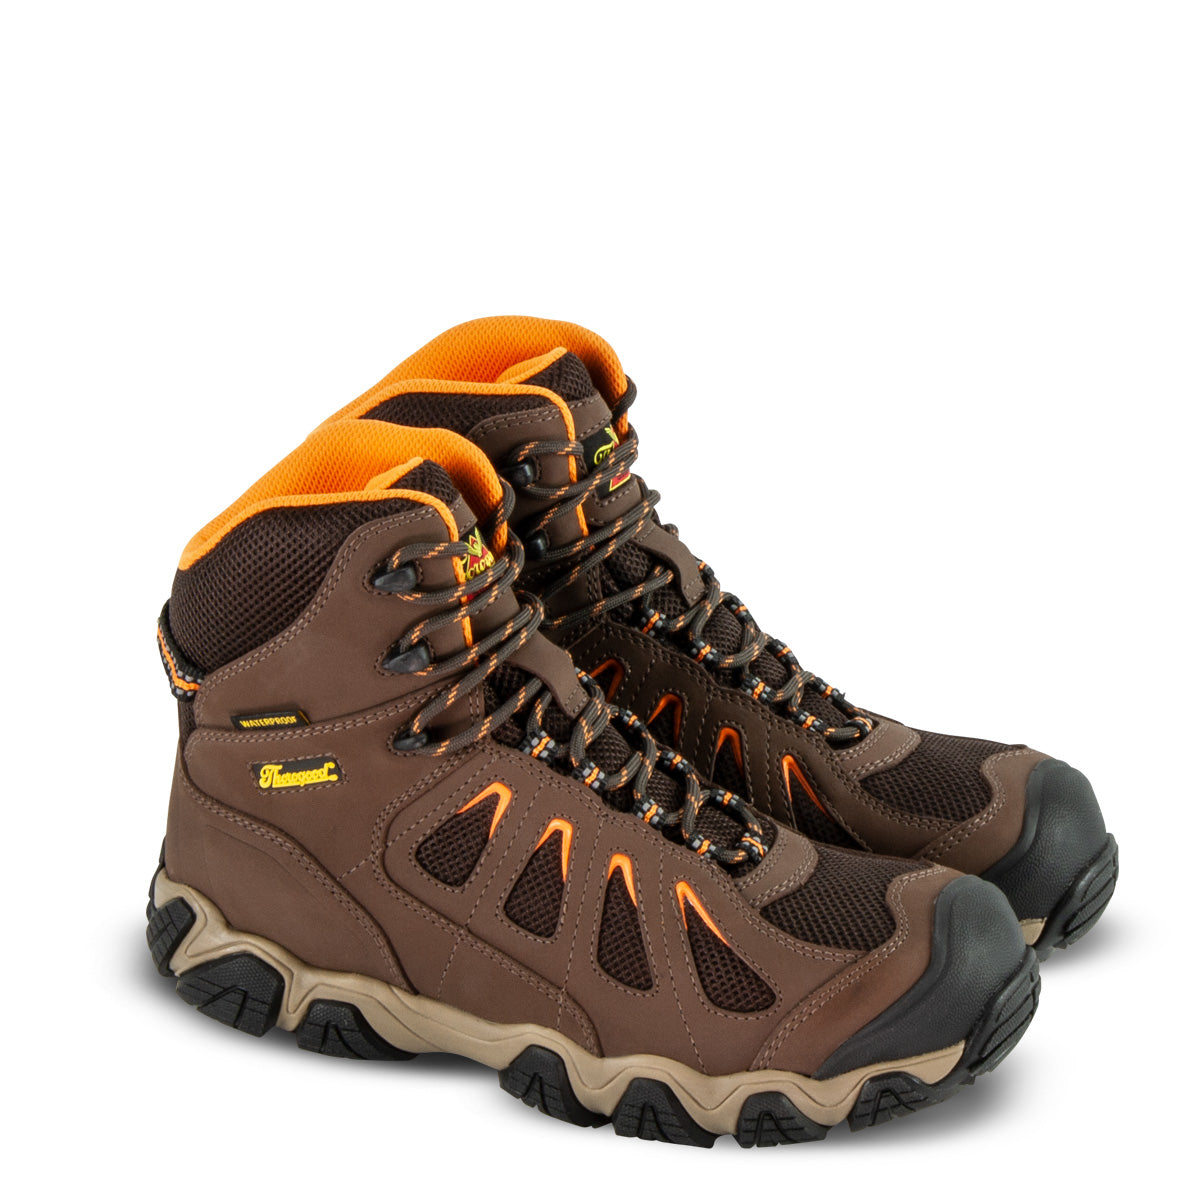 Thorogood Men's Crosstrex Series 6" Waterproof Composite Safety Toe Work Boot in Brown/Orange from the side